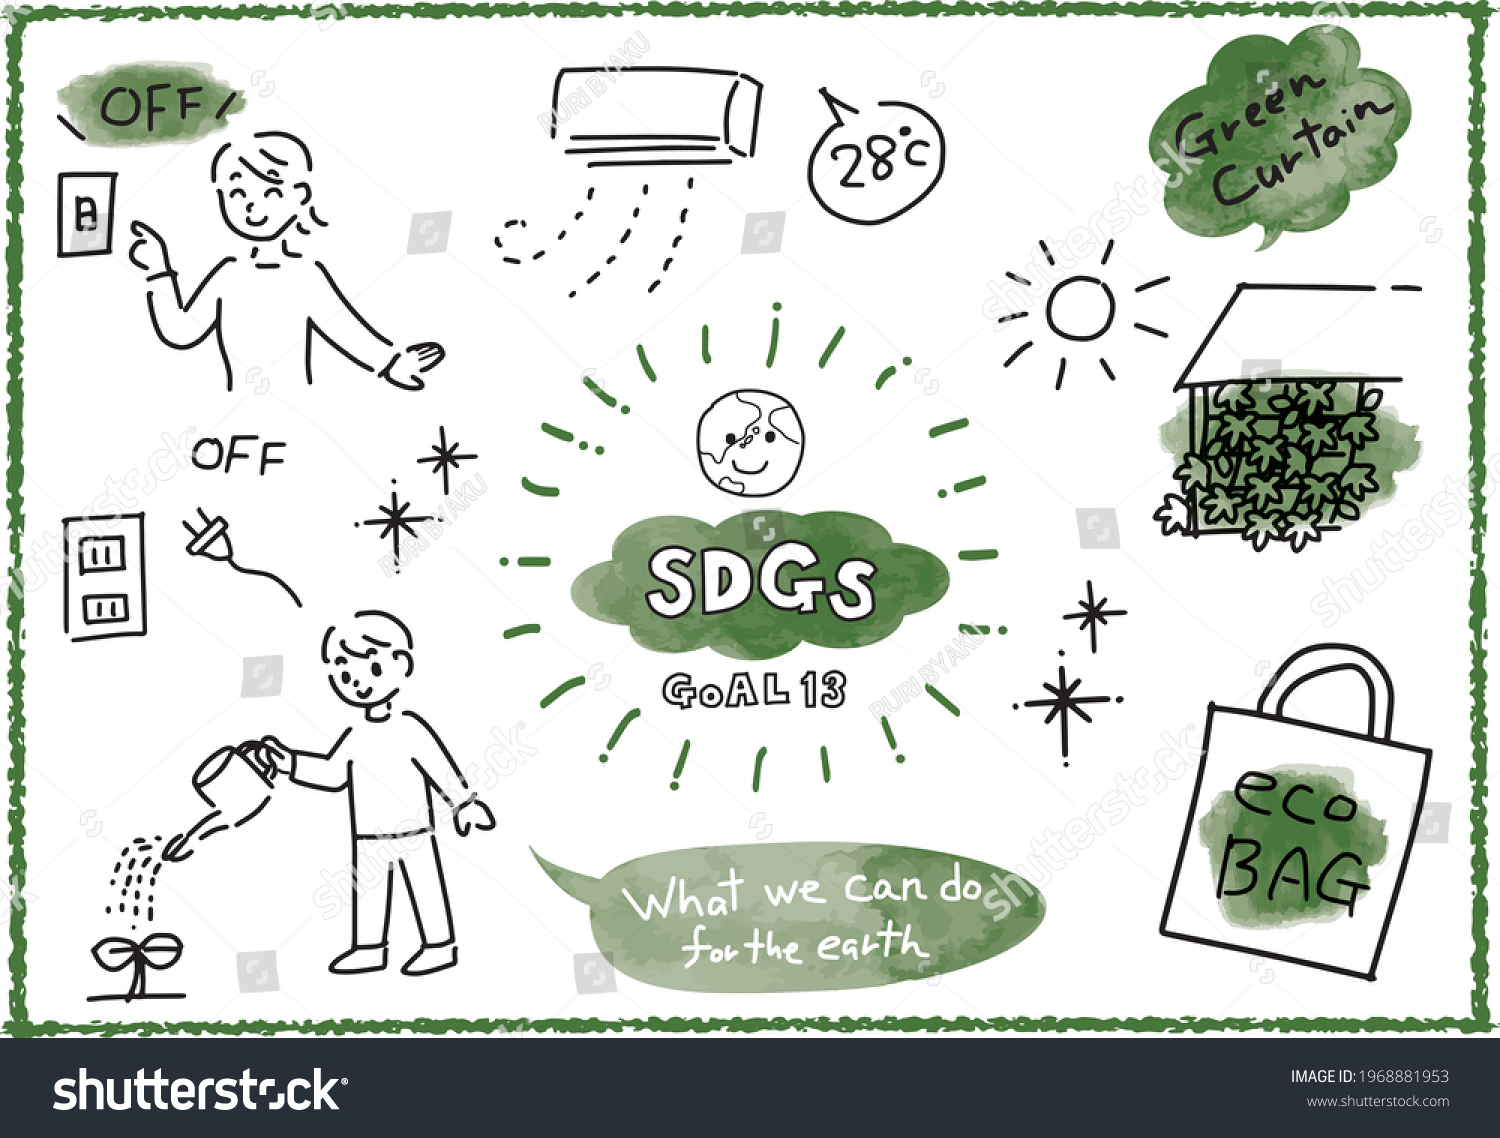 SDGs Goal Image CLIMATE ACTION Illustration Royalty Free Stock Vector Avopix